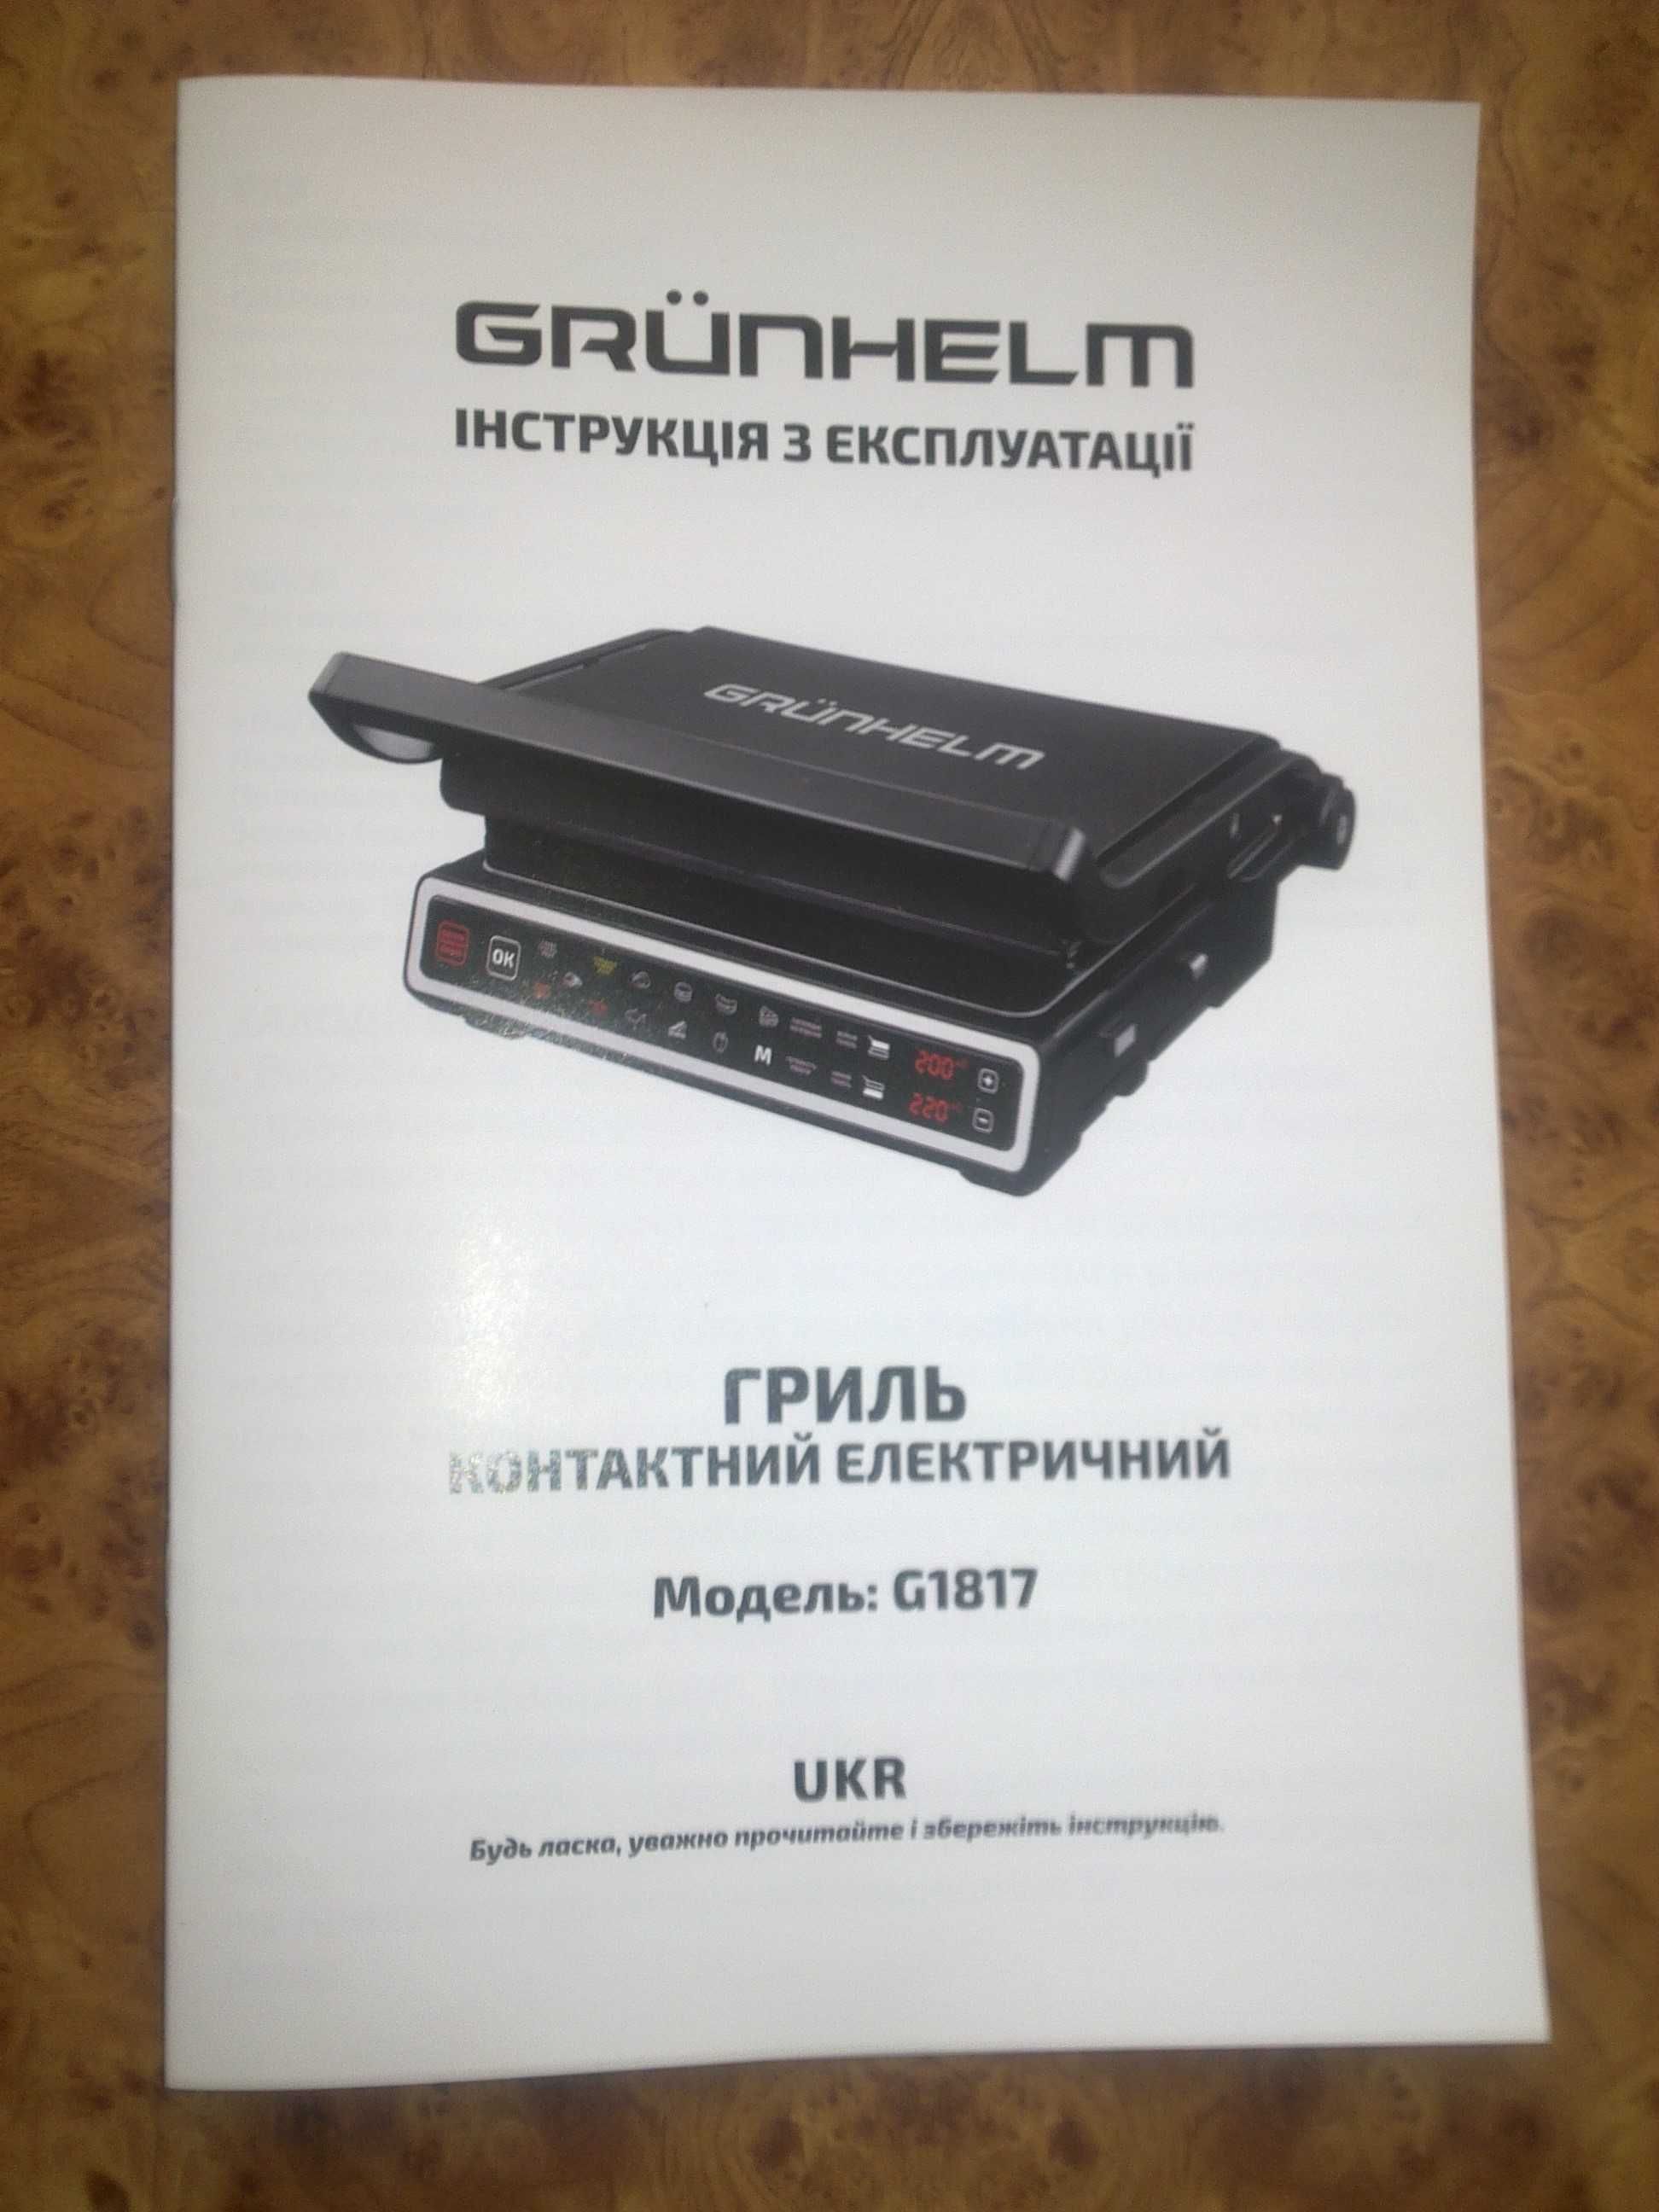 Гриль-барбекю електричний Grunhelm G1817